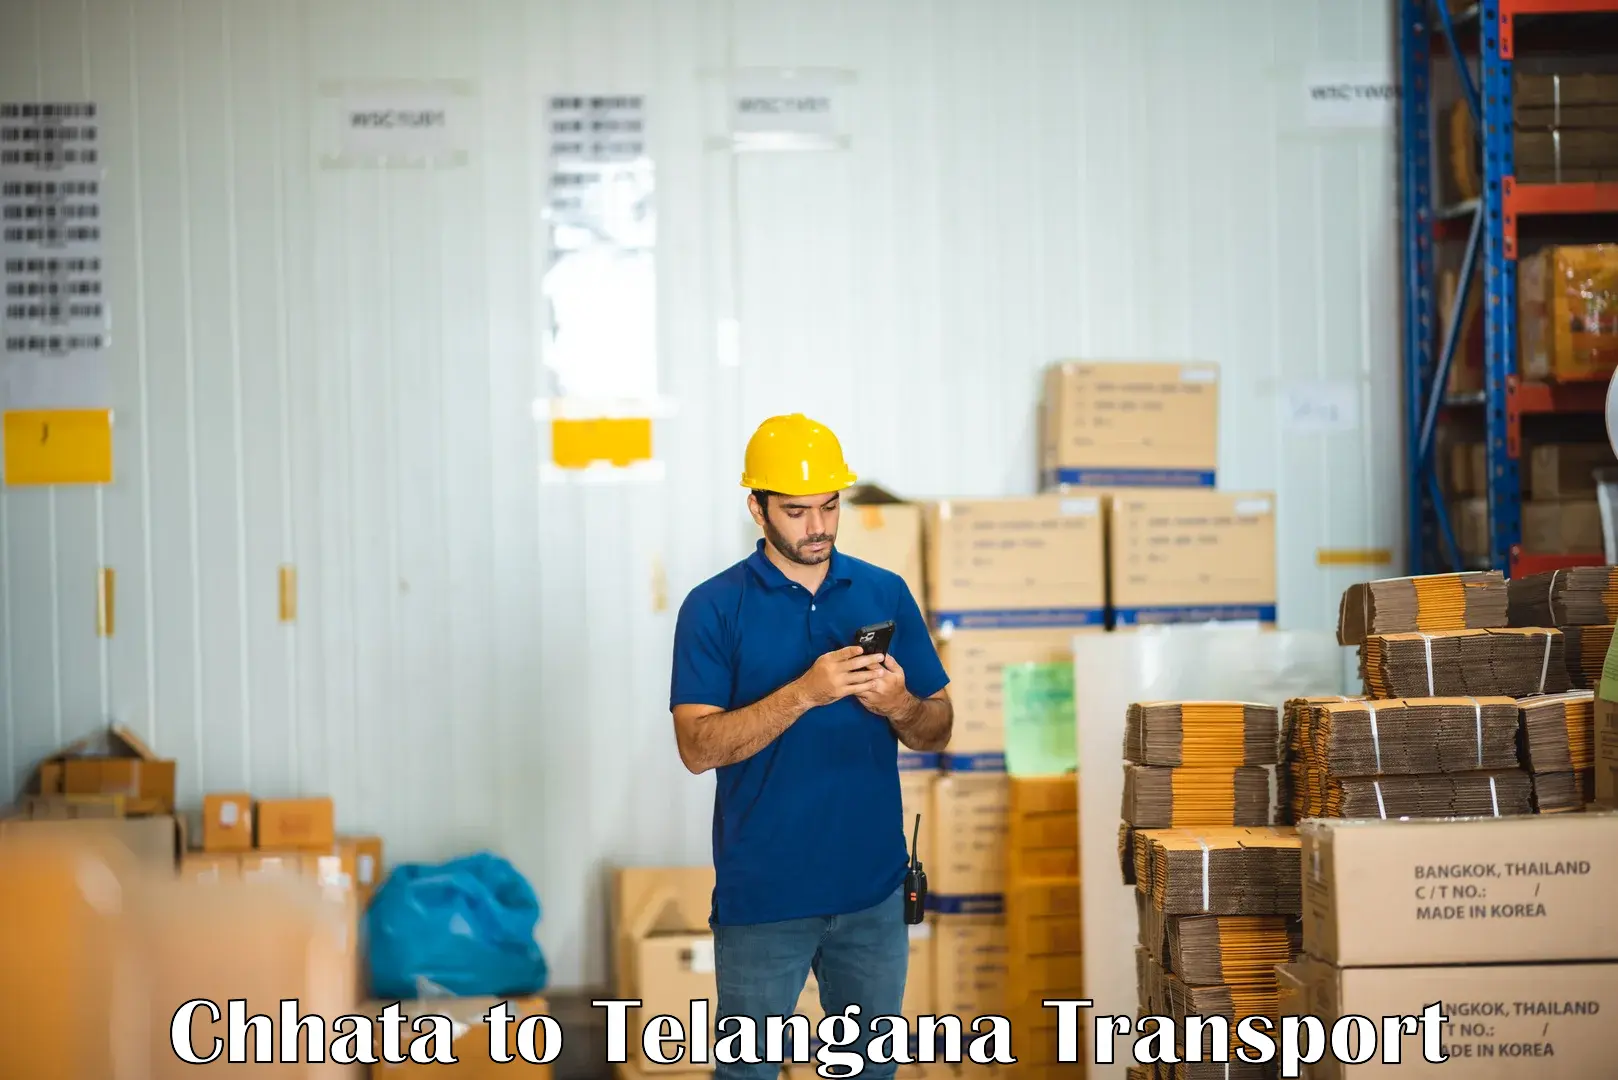 Shipping partner Chhata to Veenavanka